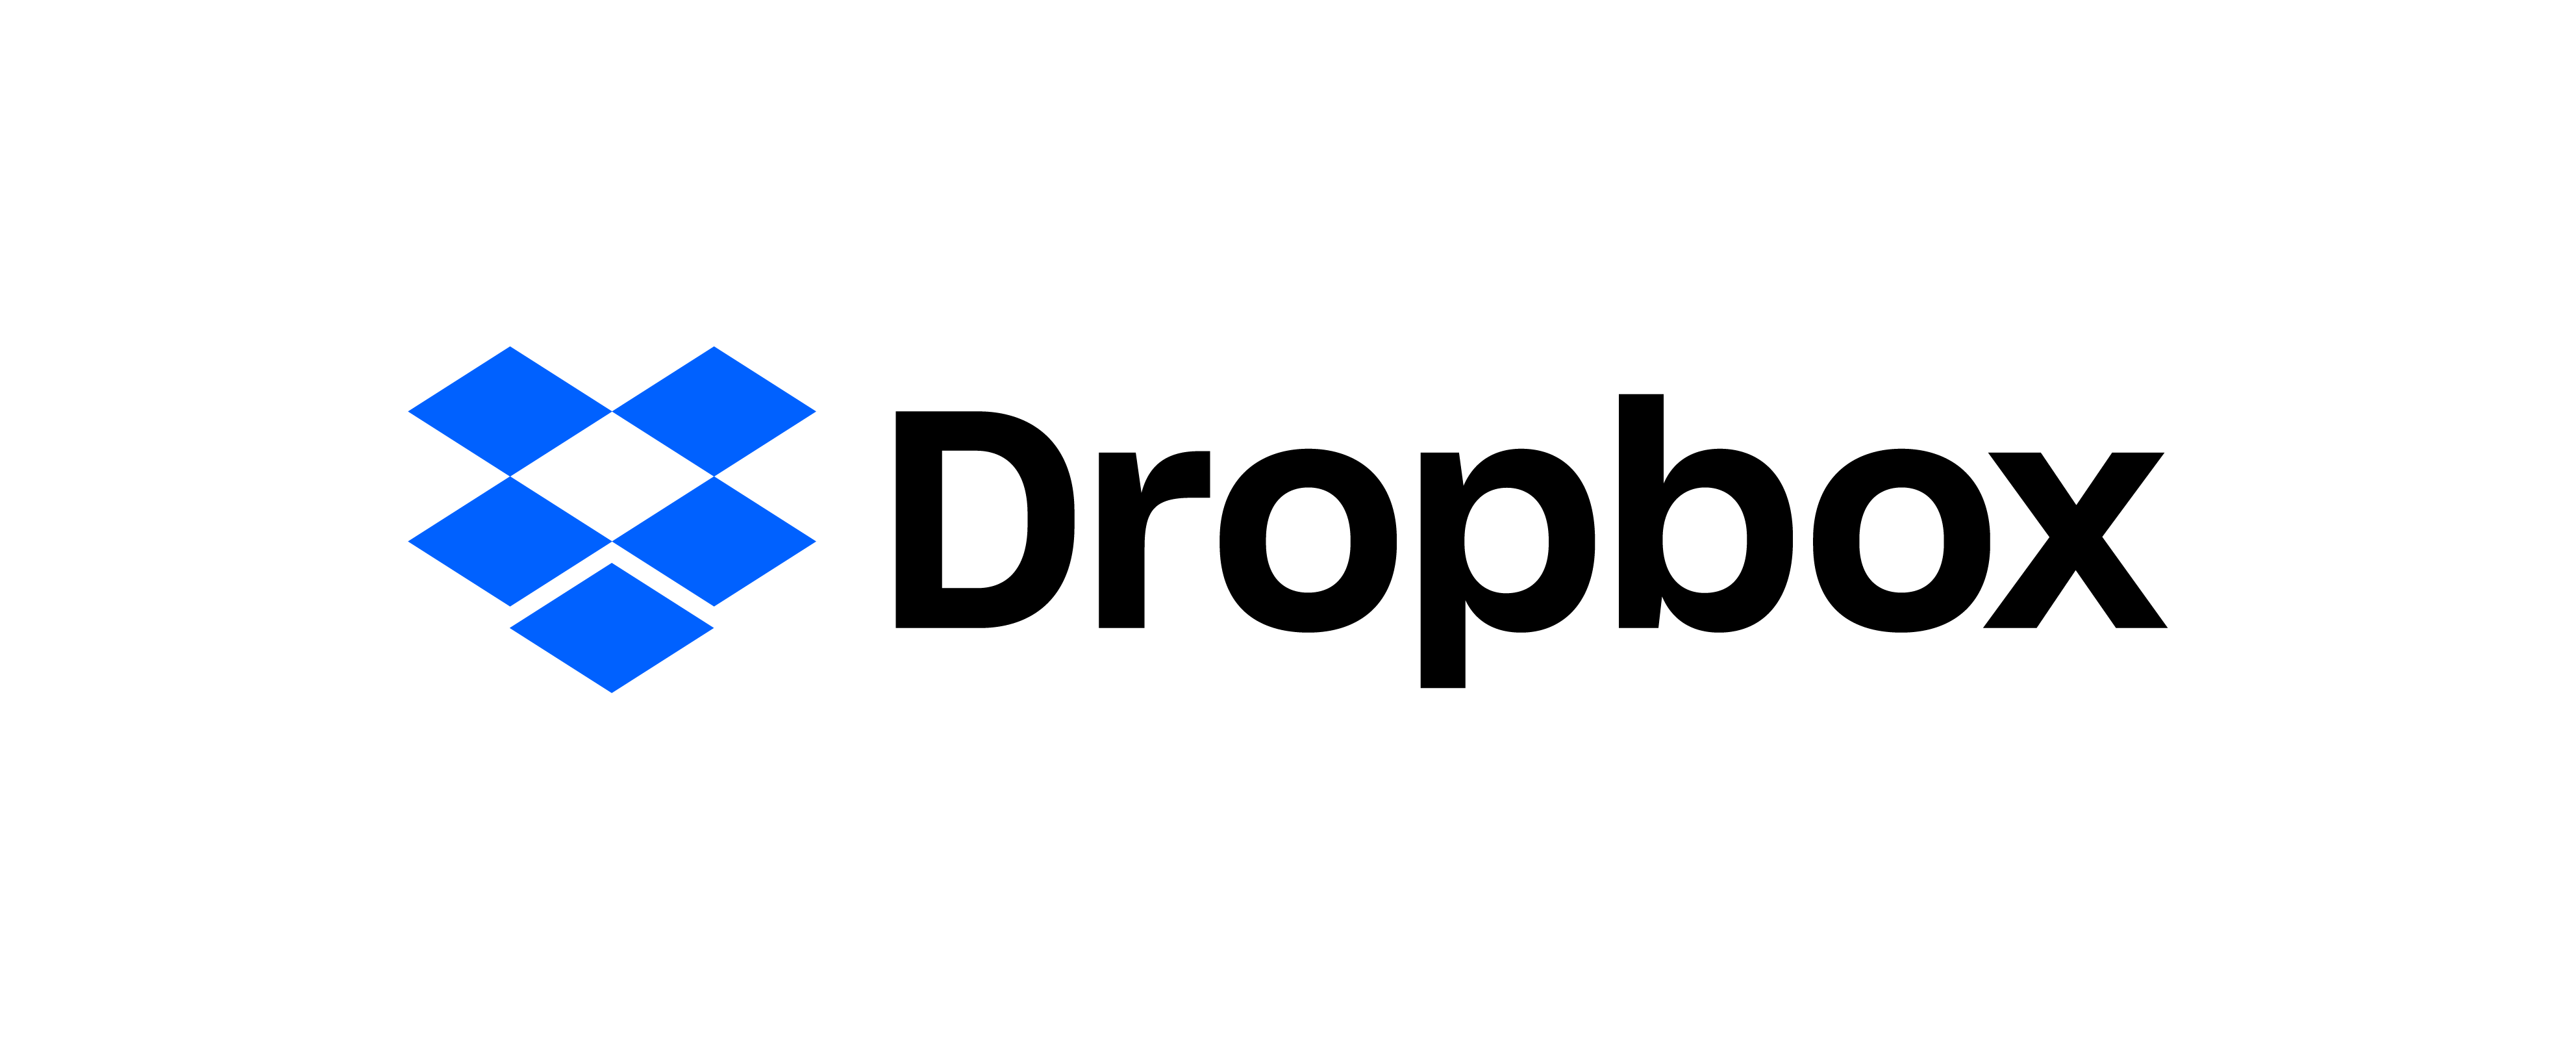 Dropbox. Дропбокс лого. Логотип облачного хранилища dropbox. Dropbox логотип 2022. Source company